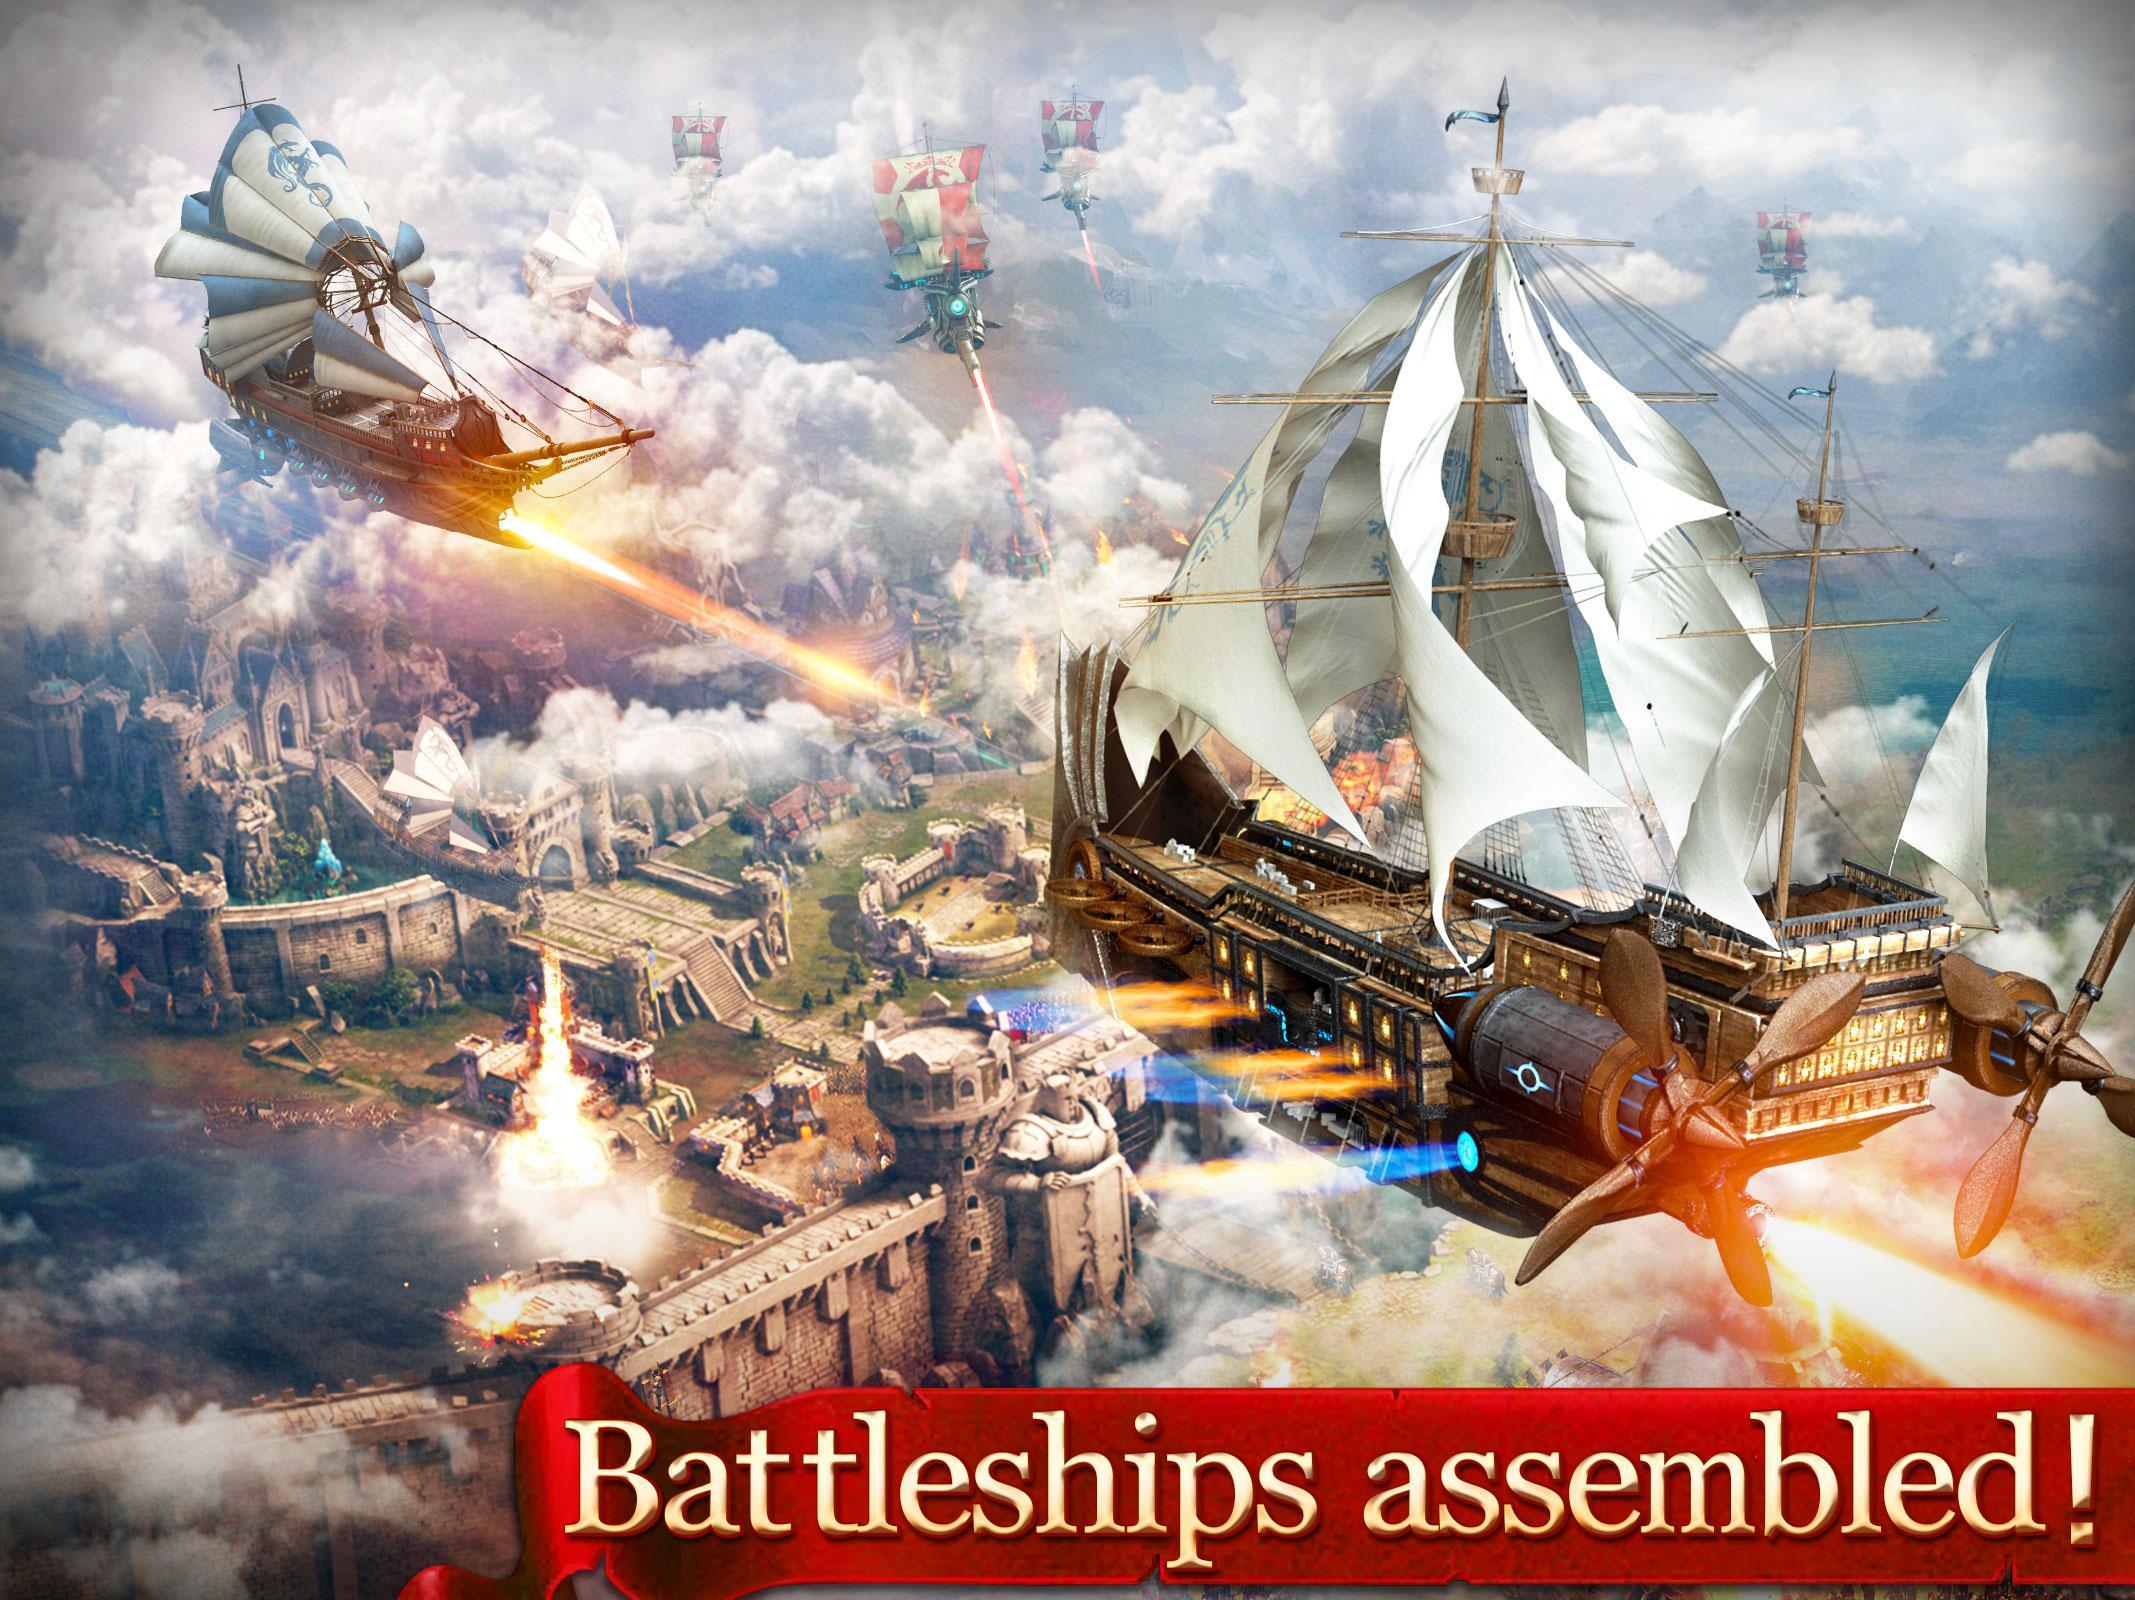 Screenshot of Age of Kings: Skyward Battle